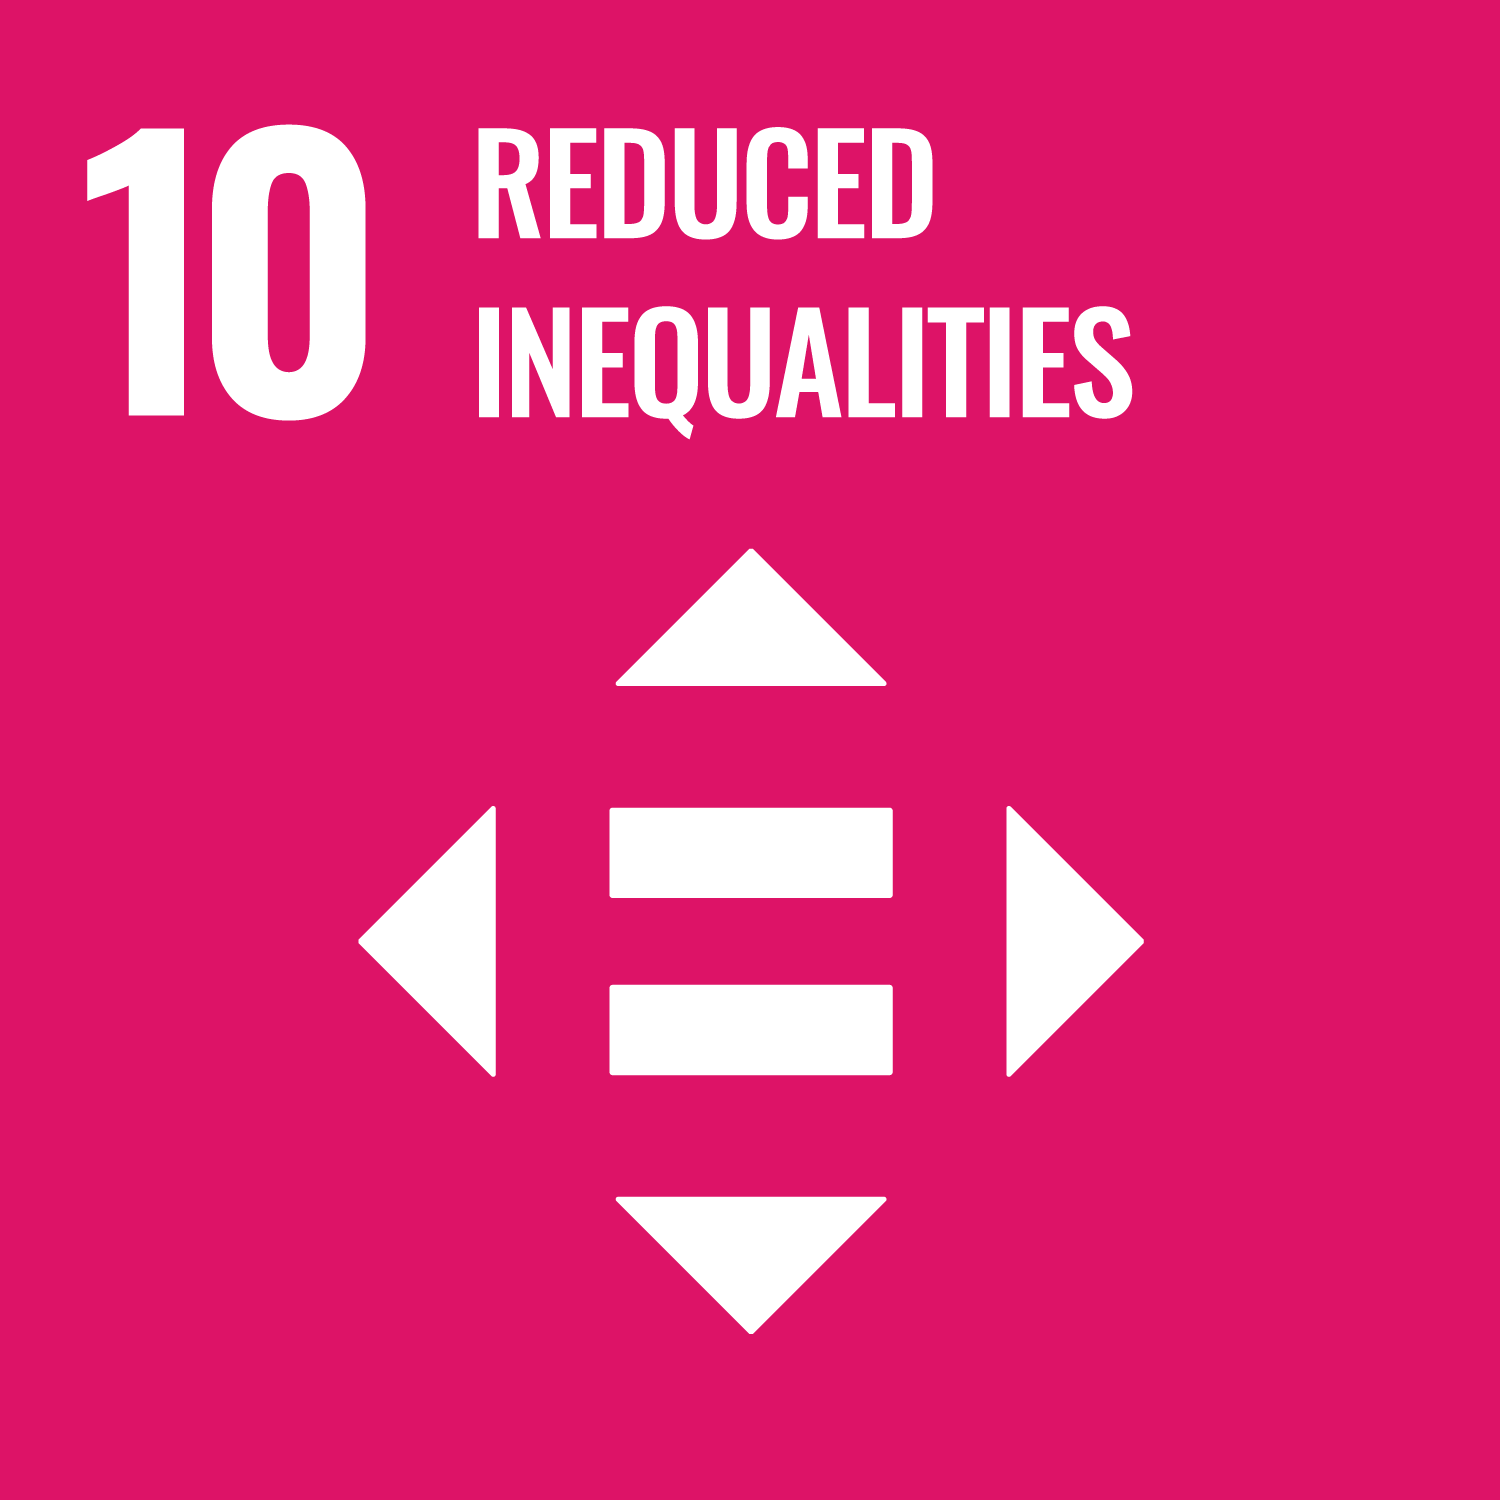 SDG Graphic Reduced Inequalities